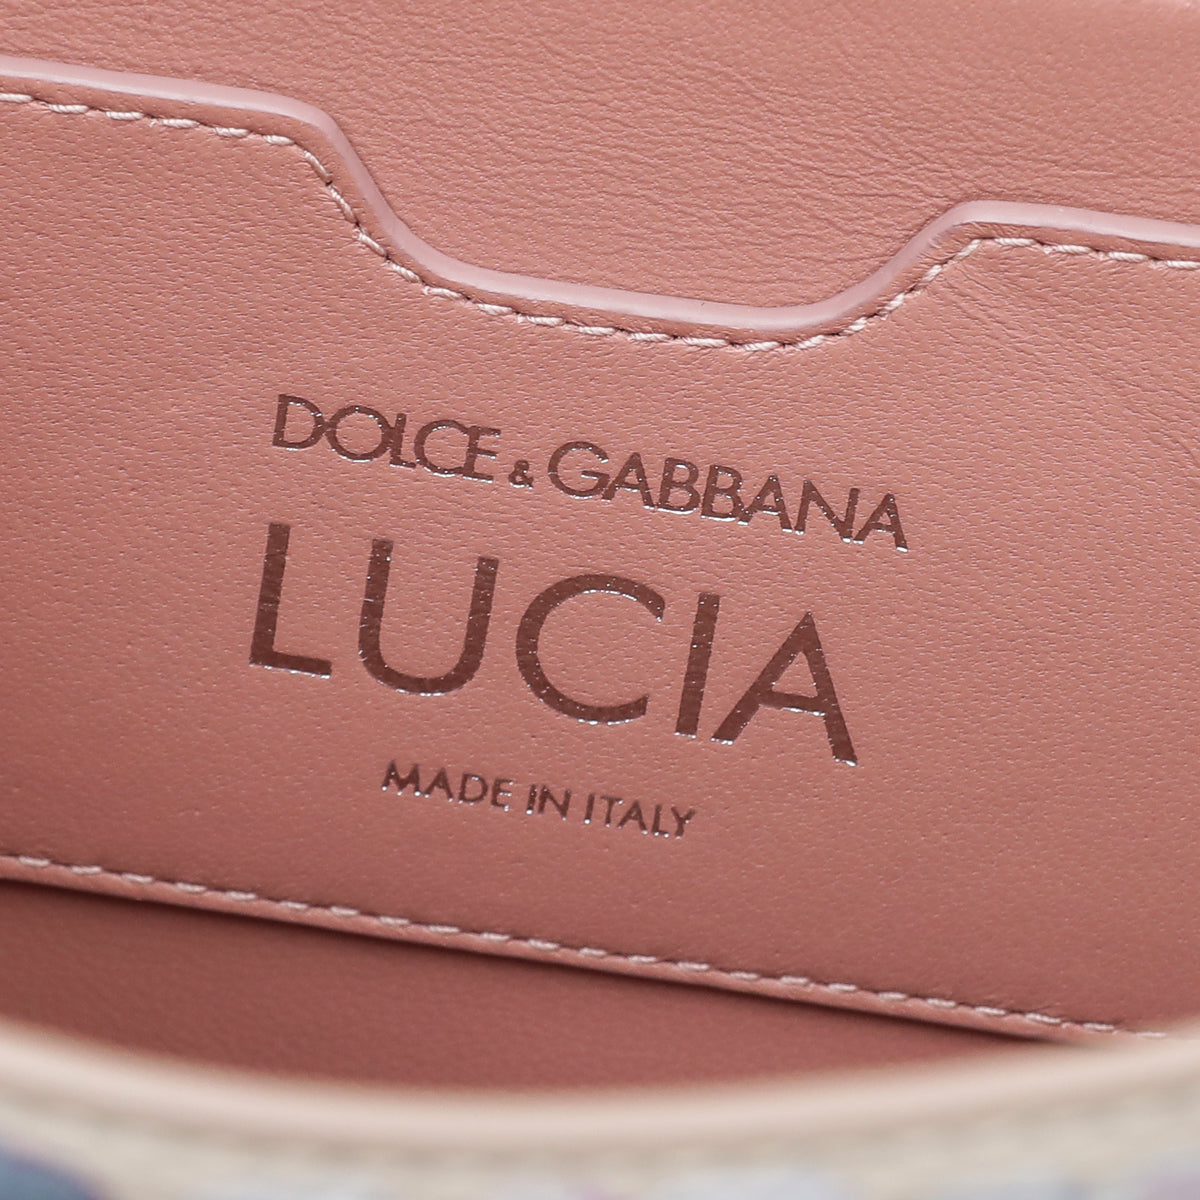 Dolce & Gabbana Cream Lucia Hydrangea Print Flap Bag